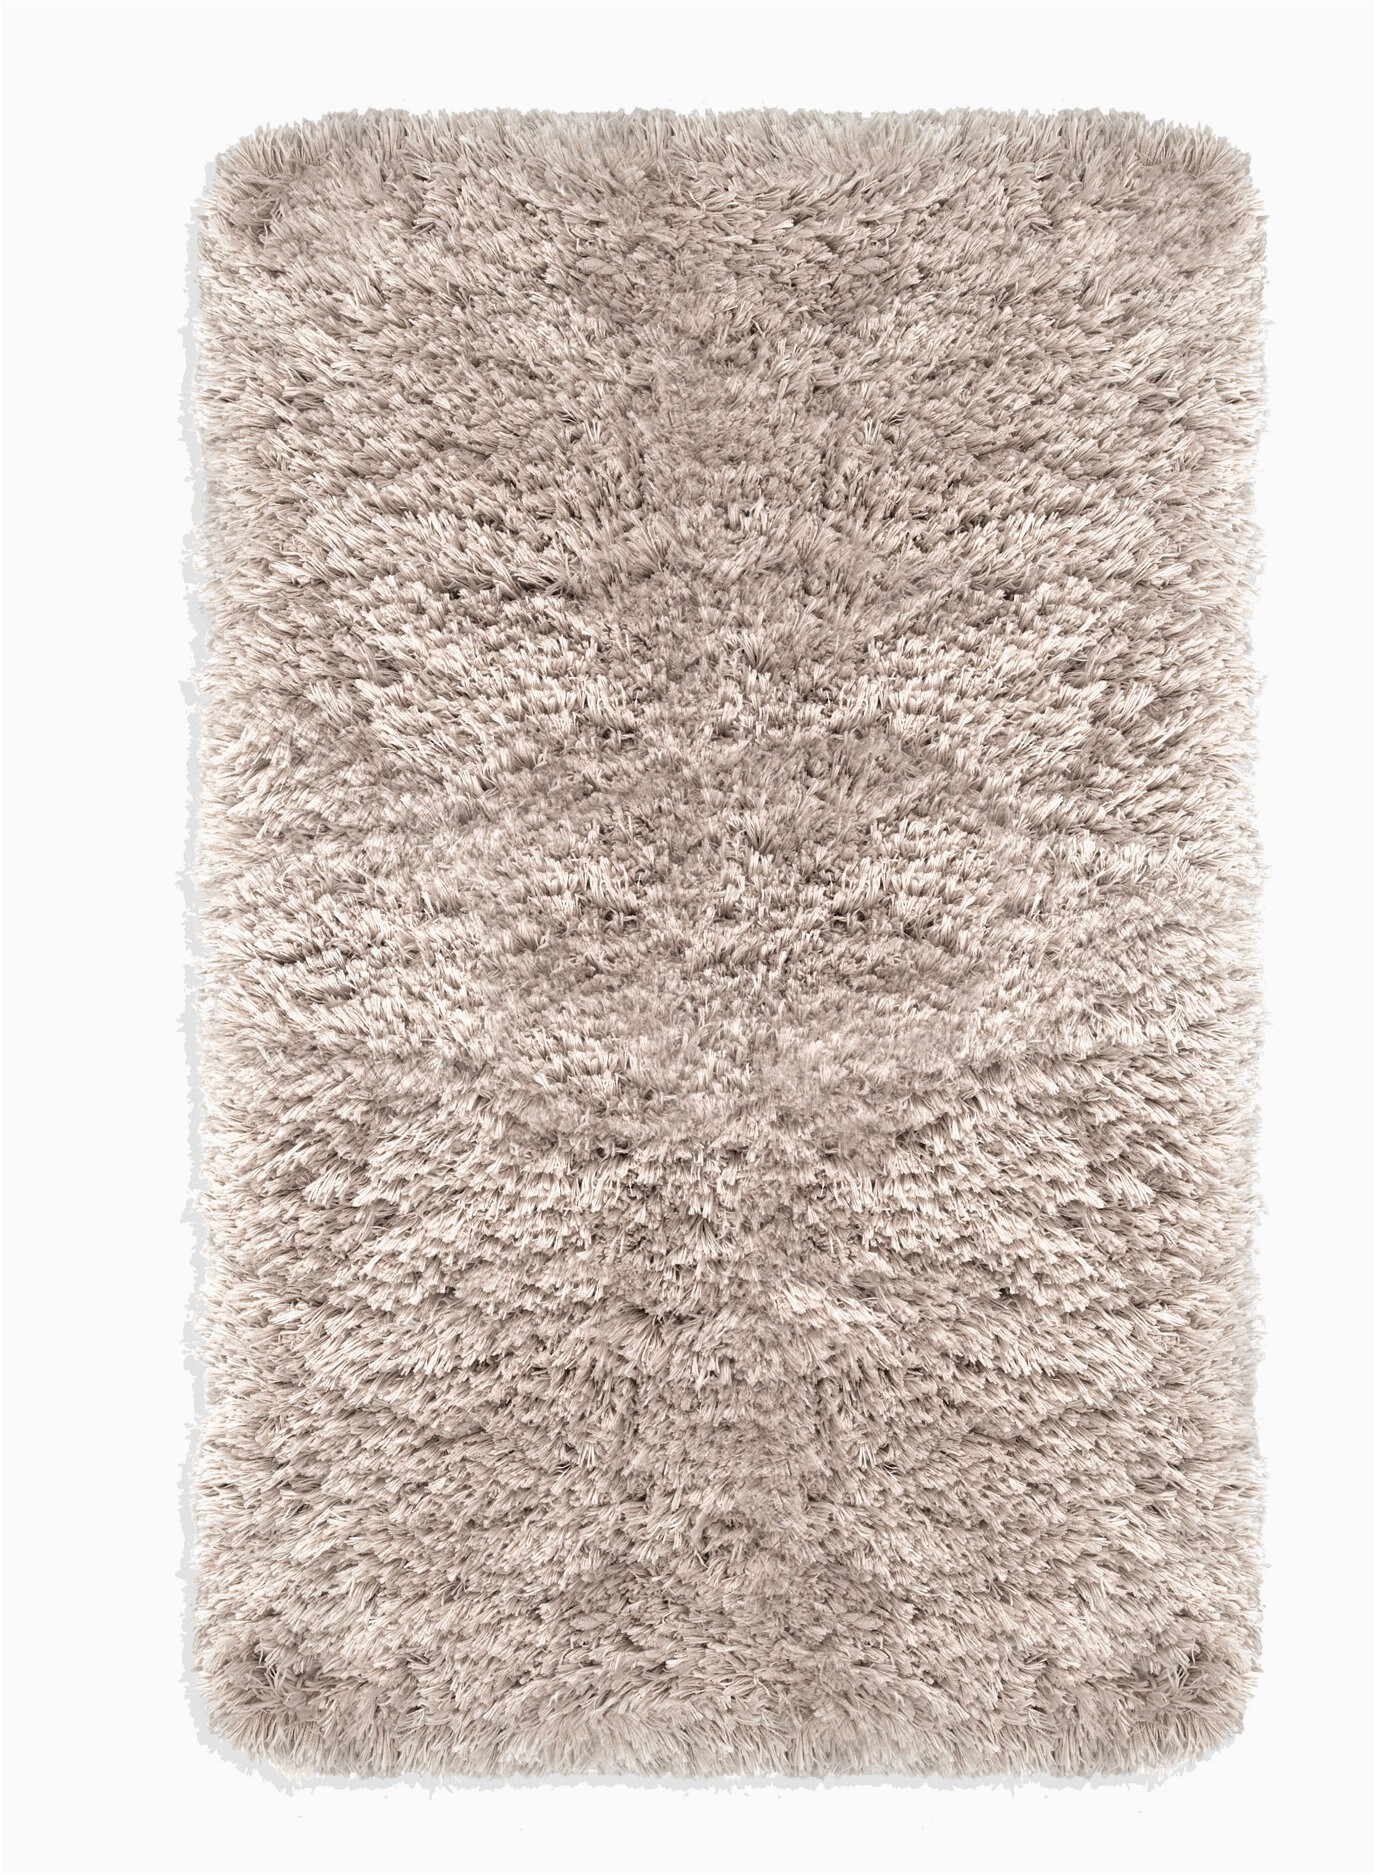 gerwalta rectangular polyester non slip solid bath rug